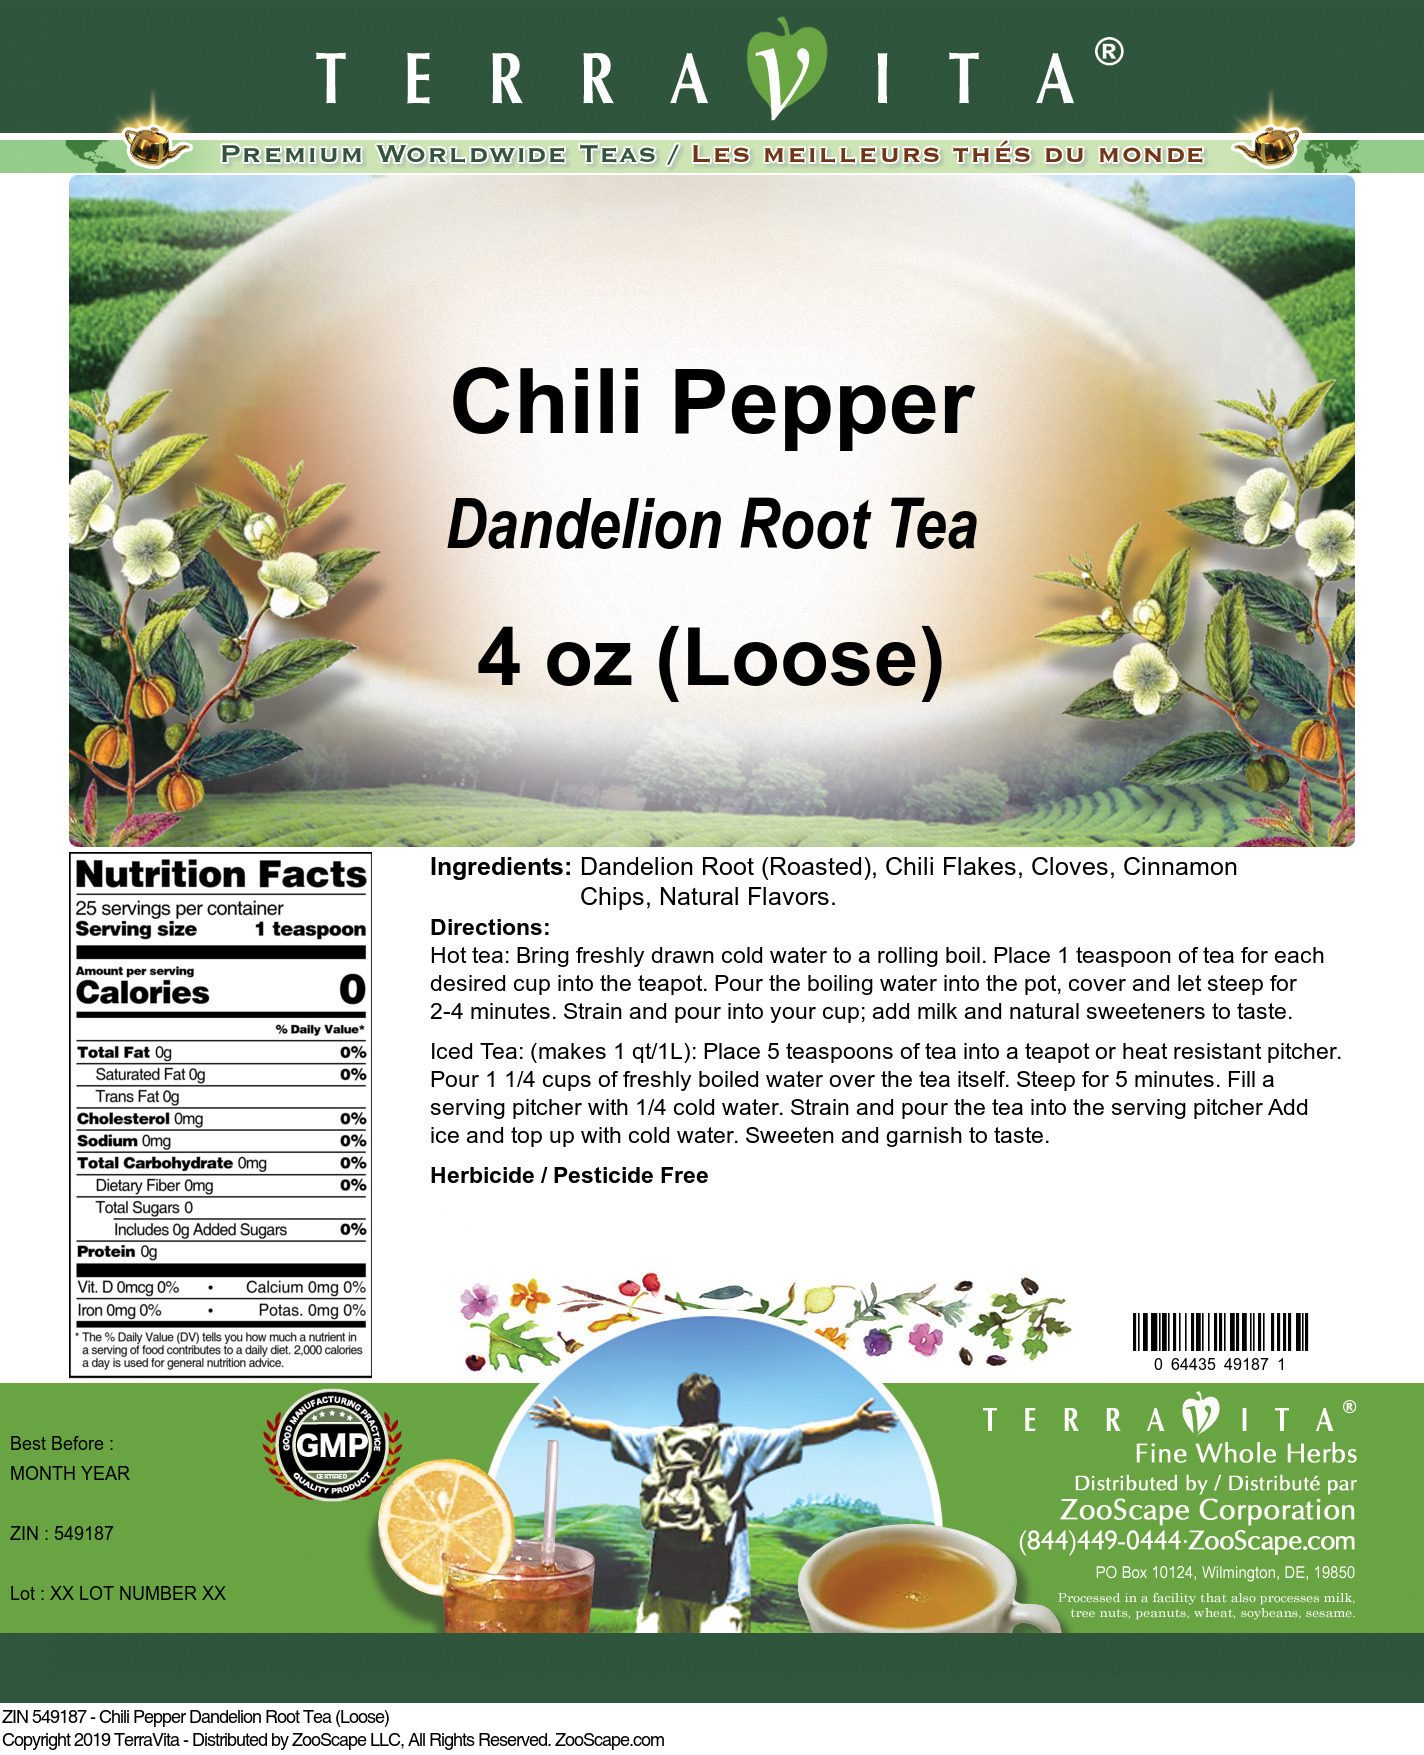 Chili Pepper Dandelion Root Tea (Loose) - Label